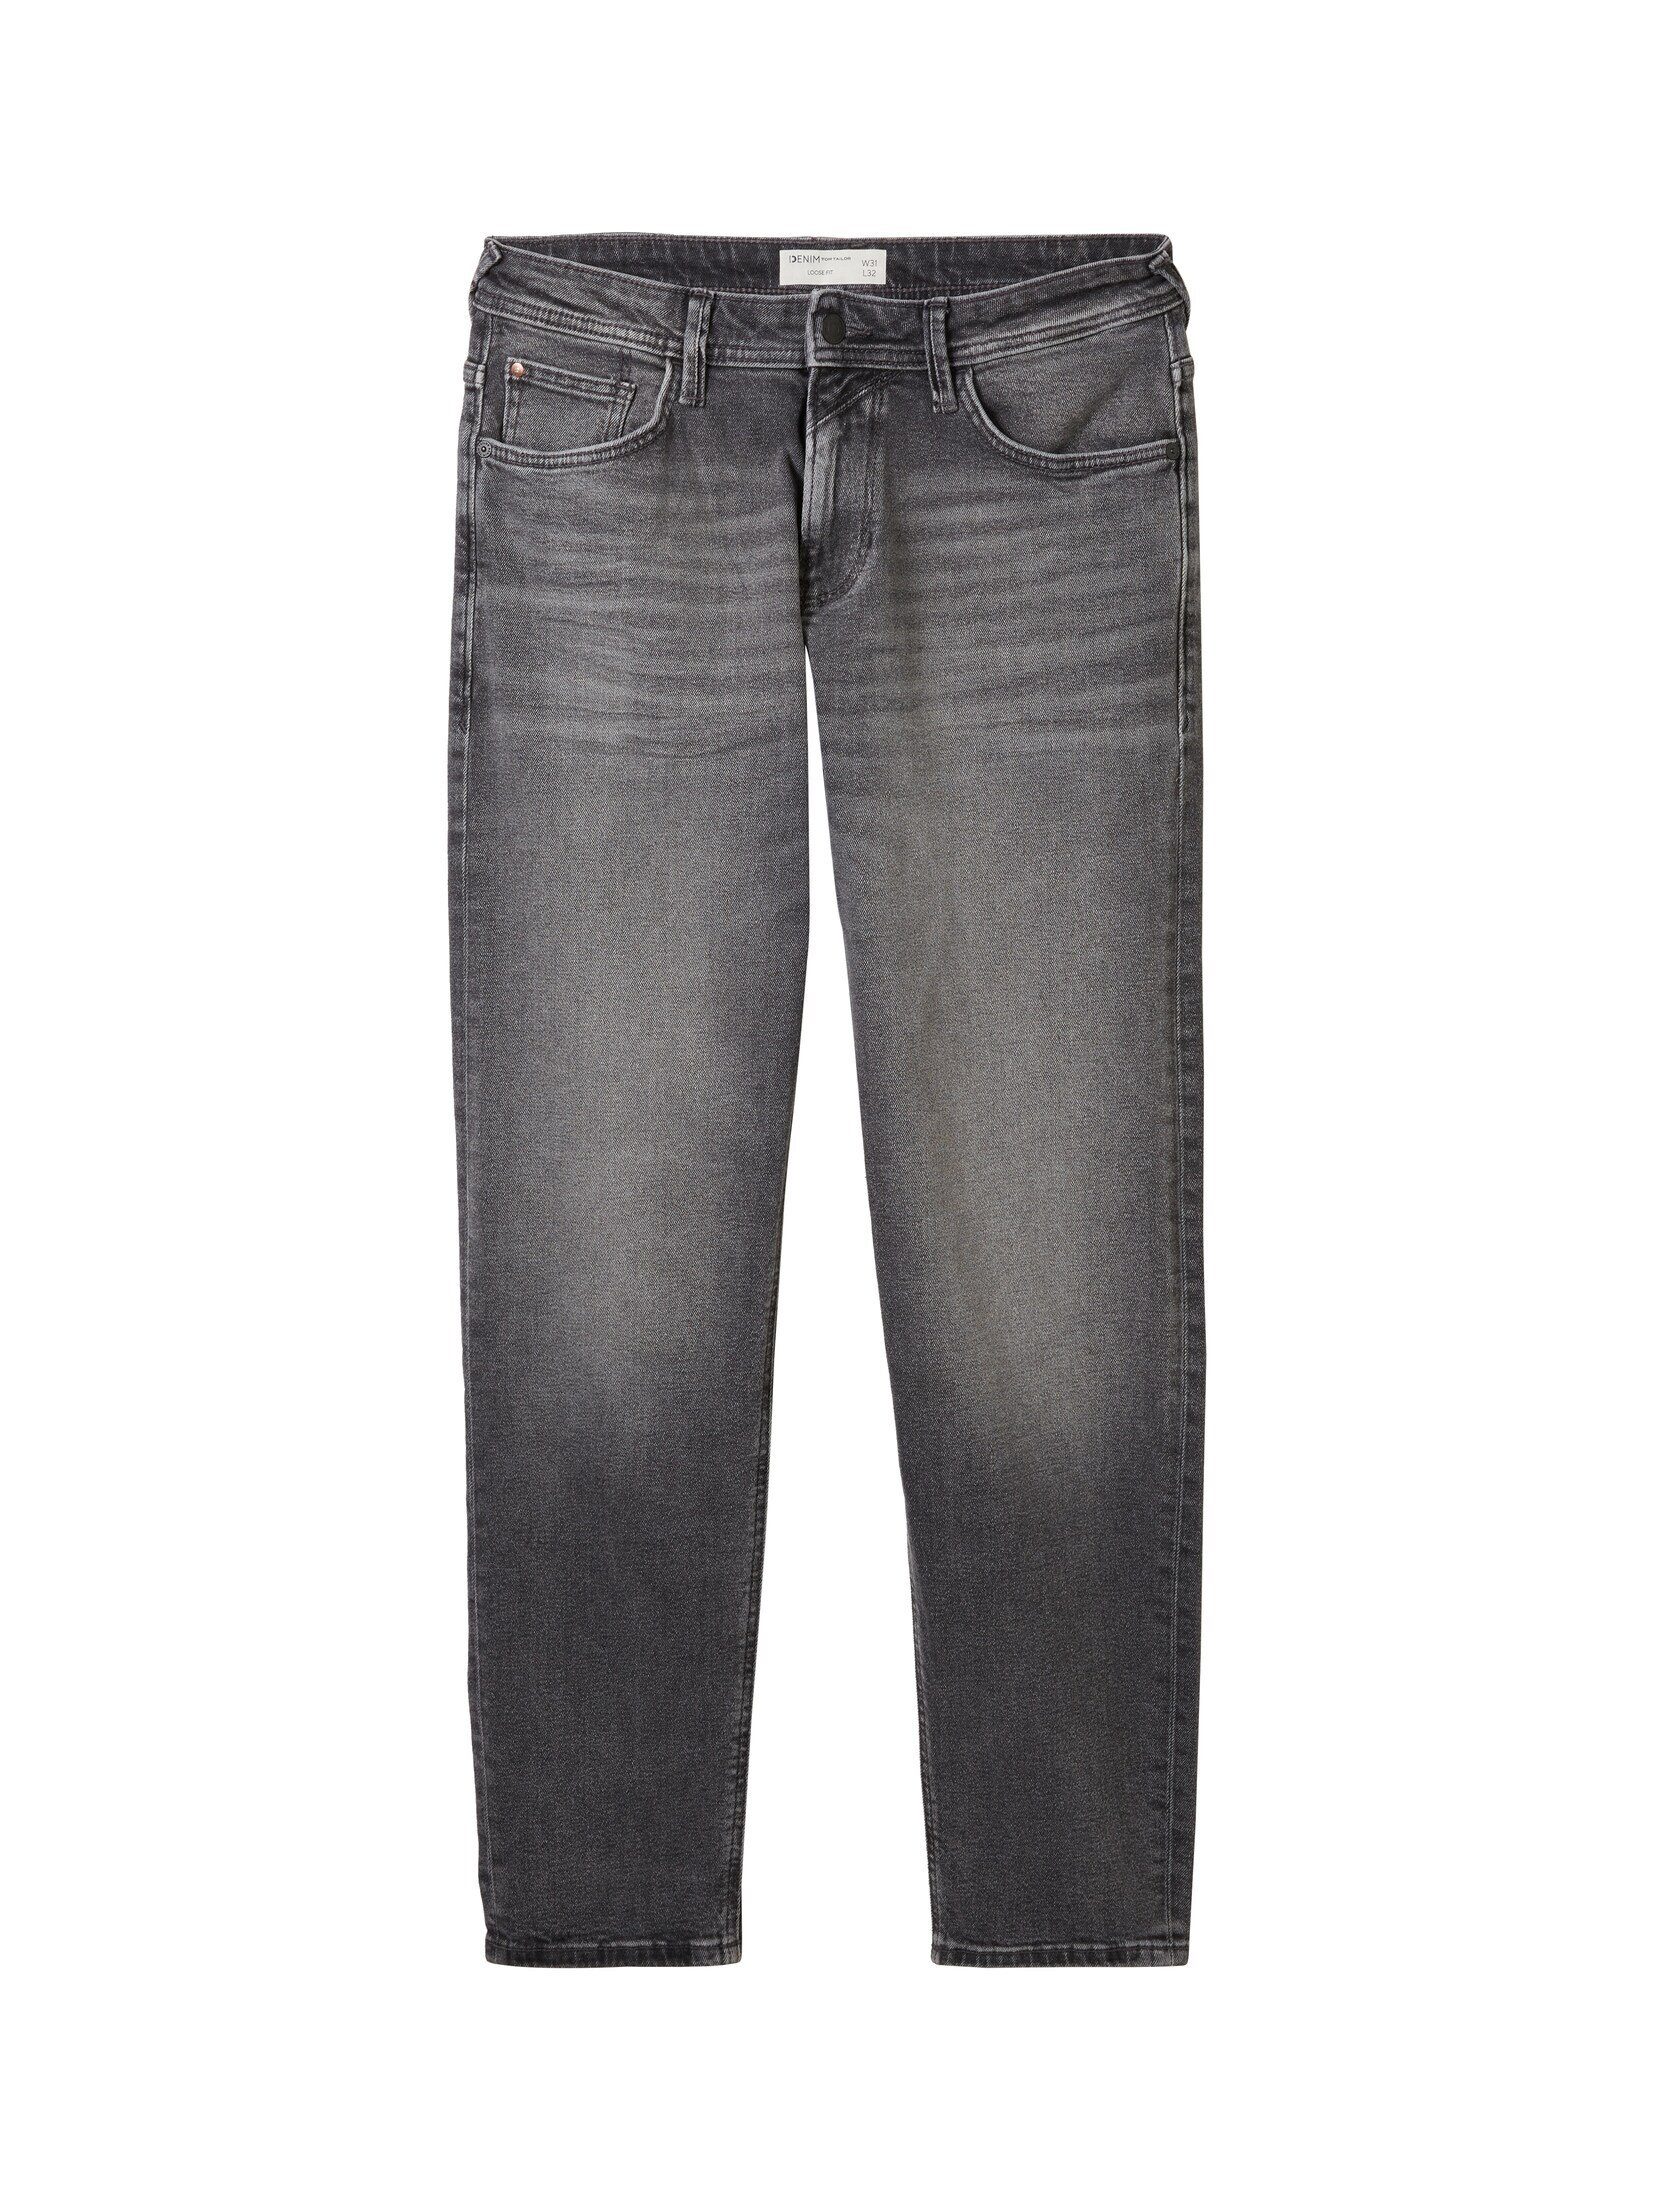 Denim grey TAILOR Baumwolle Jeans Straight-Jeans nachhaltigeren Loose mit used denim mid Fit TOM stone